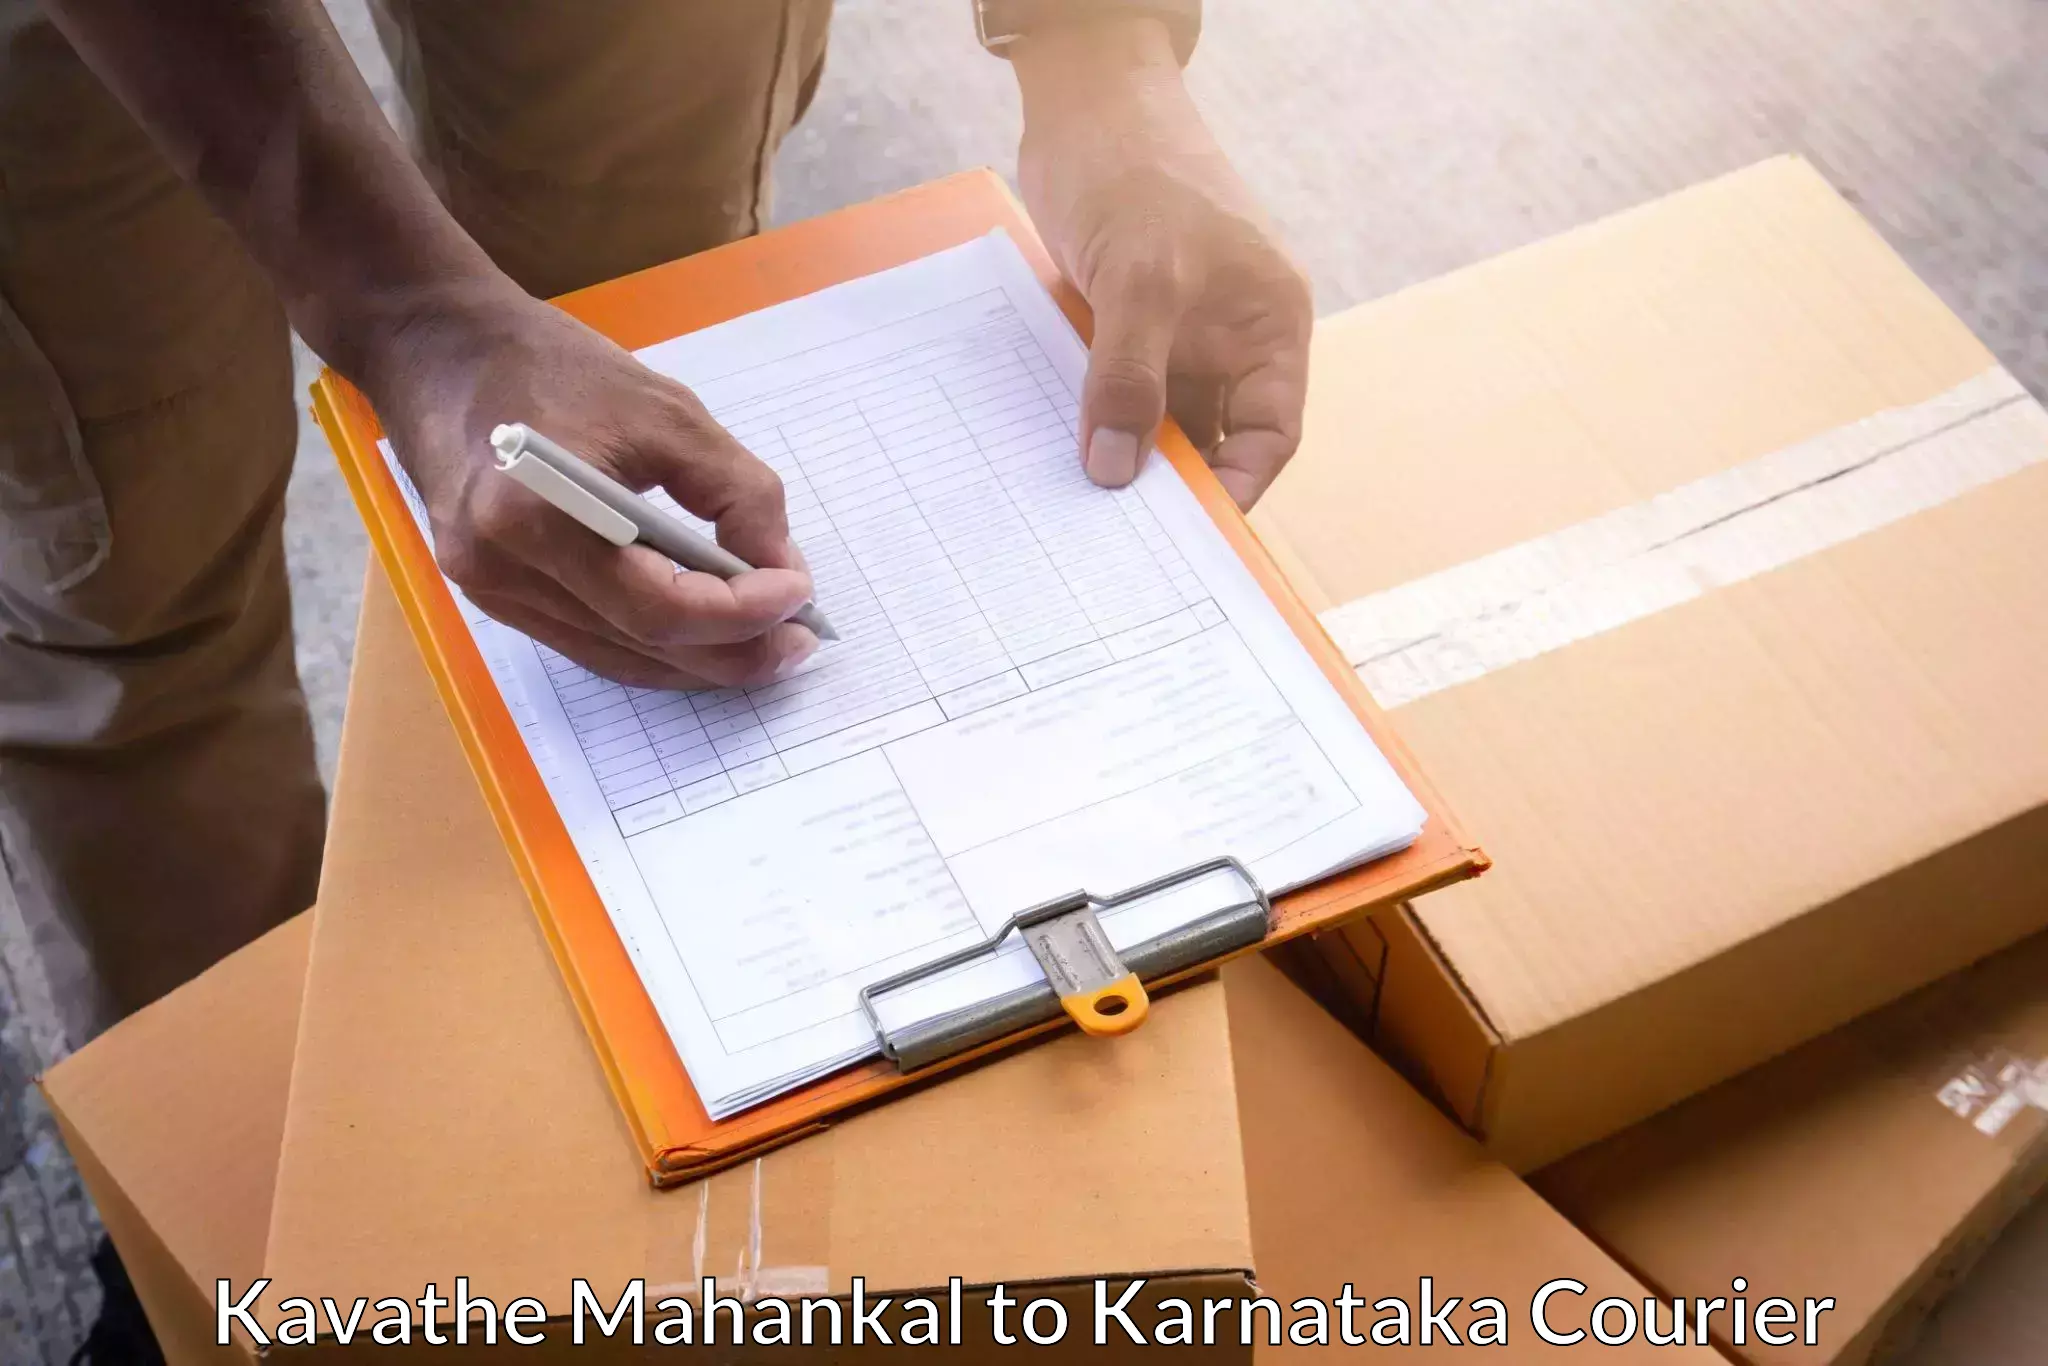 Global shipping solutions Kavathe Mahankal to Shikaripur